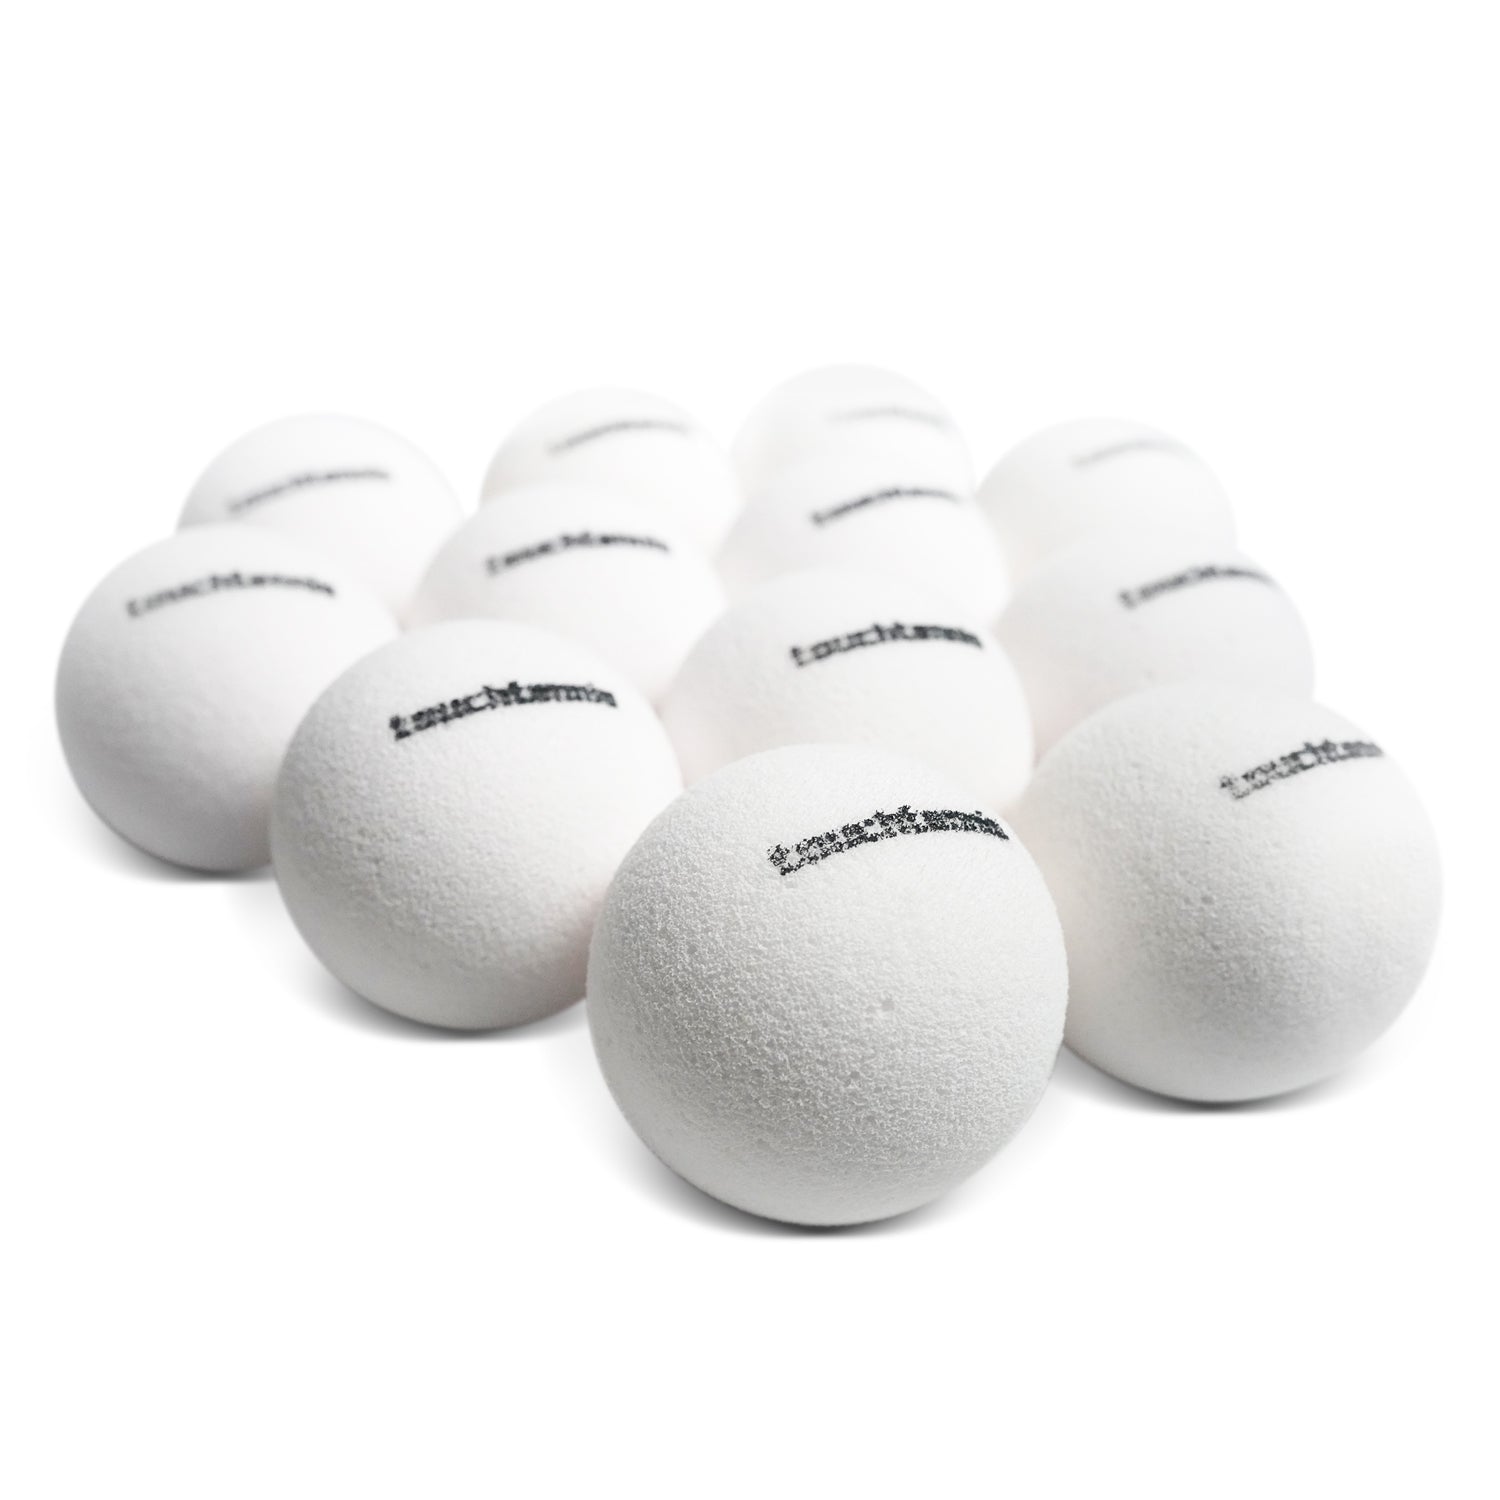 White Ping Pong Balls, Price Per DOZEN